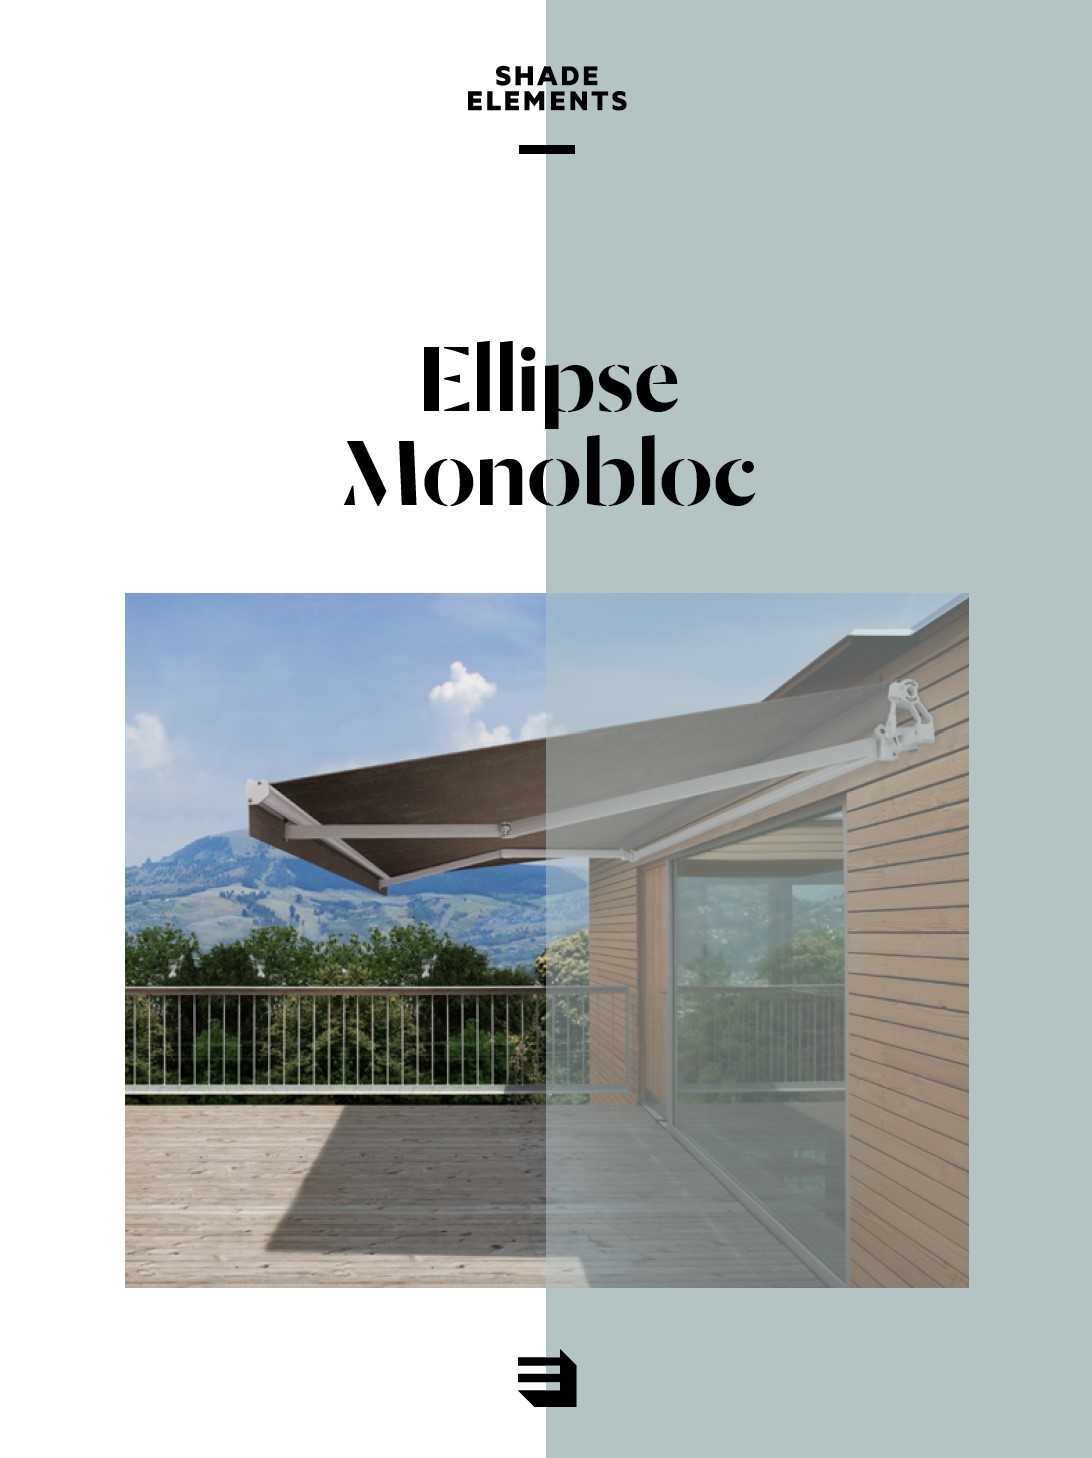 Ellipse Monobloc brochure for manual awning thumb